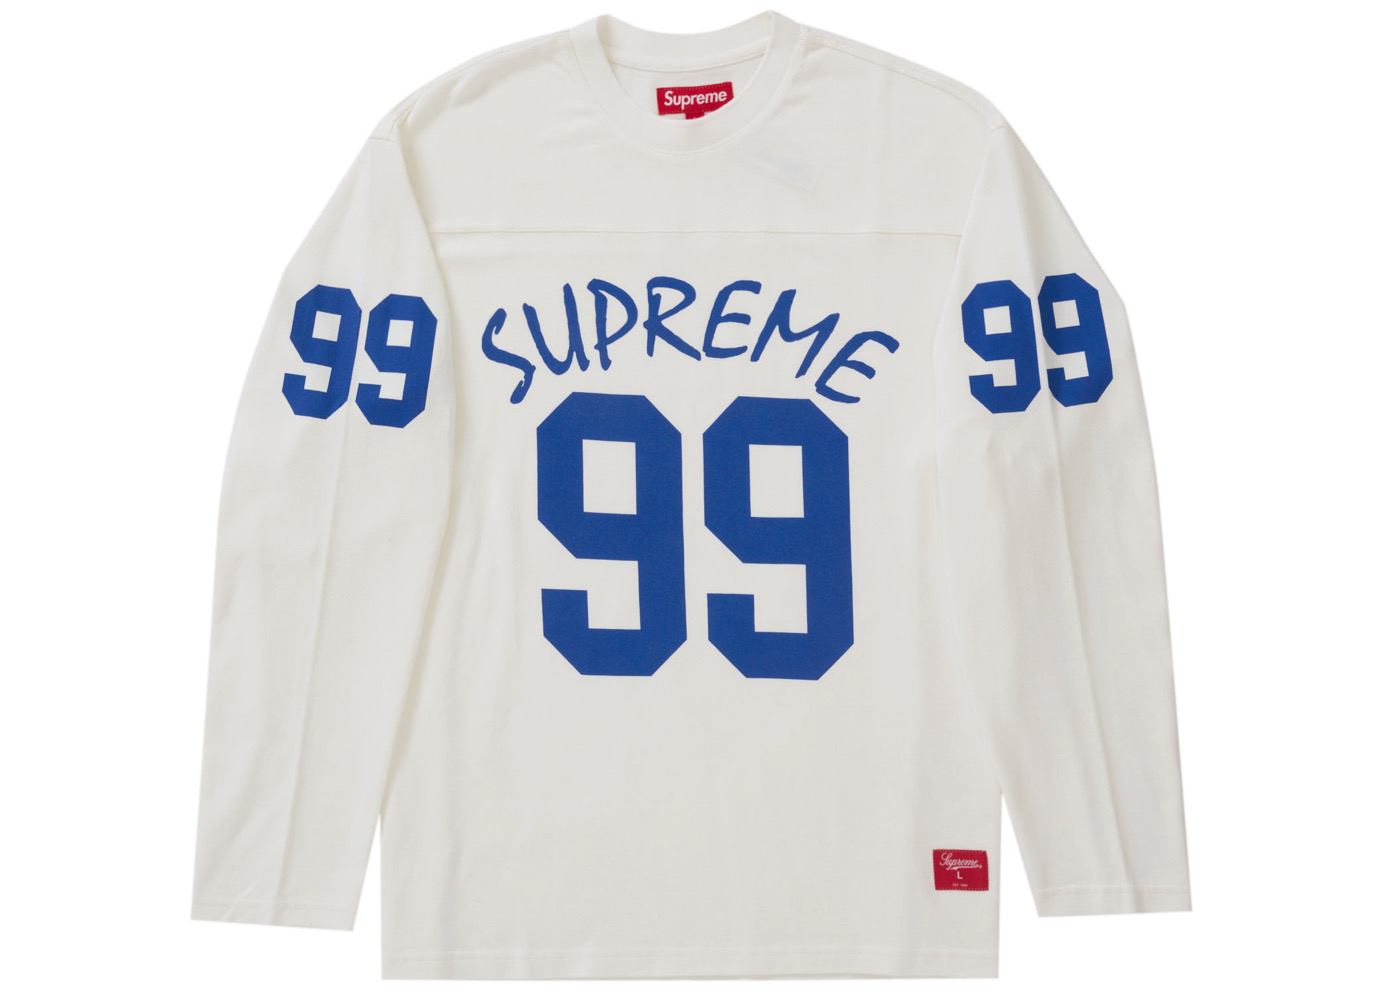 supreme 99 l/s football topファッション